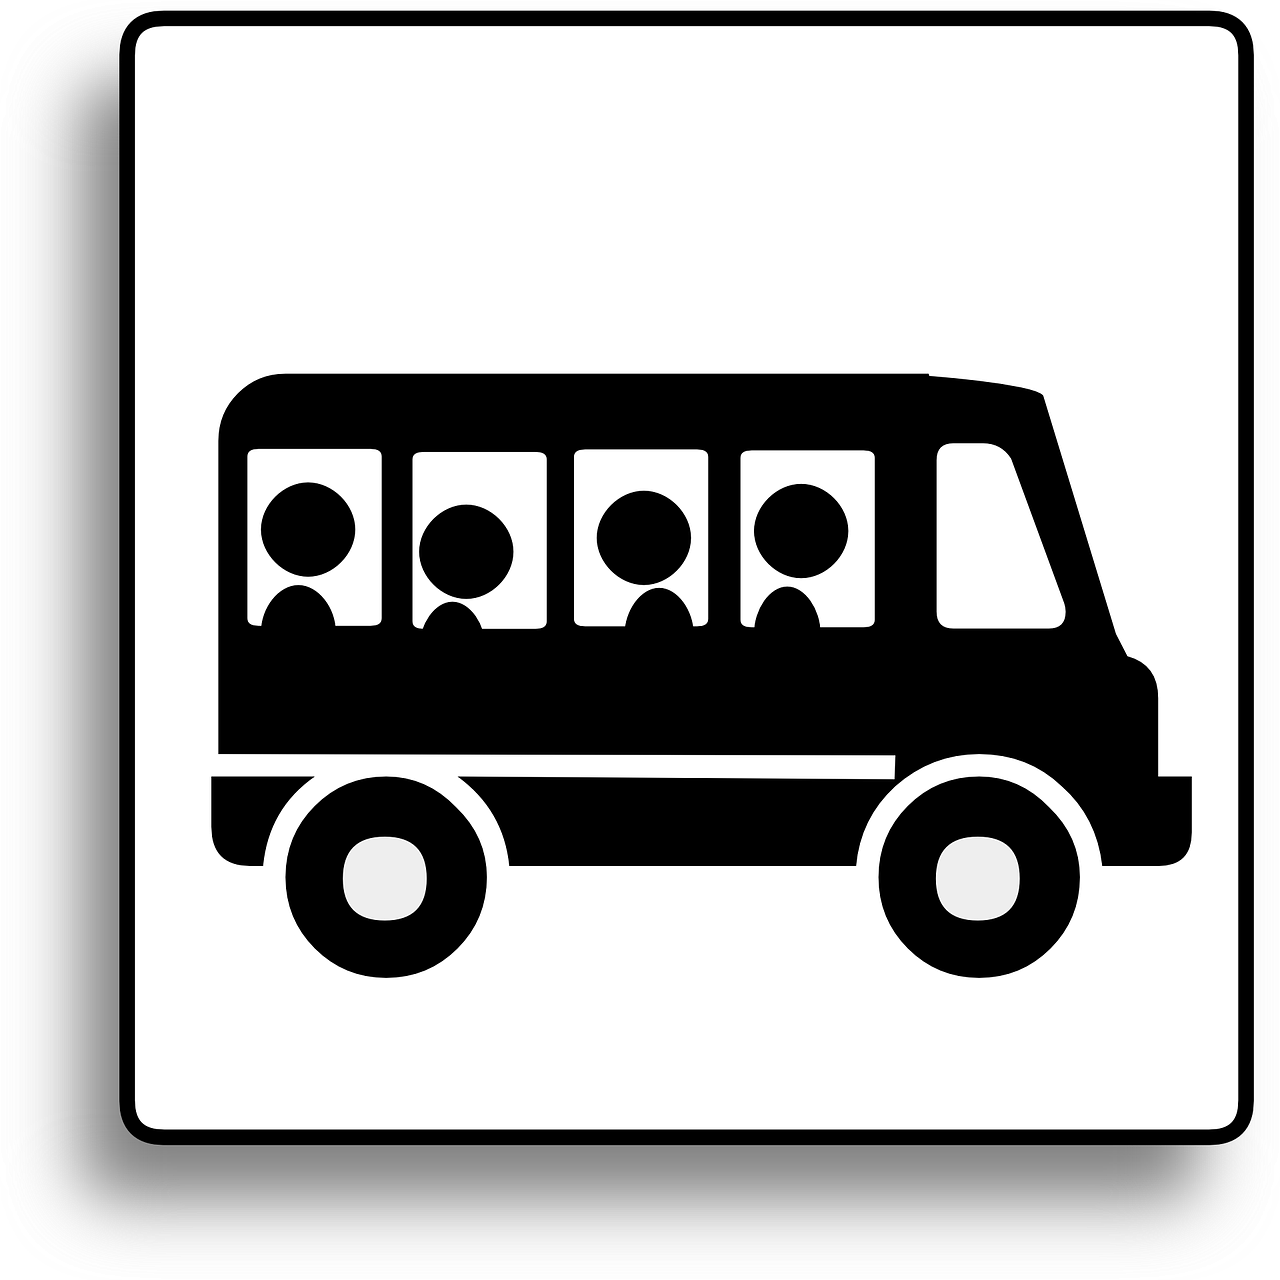 Mokyklinis Autobusas, Miesto Autobusas, Autobusas, Gabenimas, Motorinis Treneris, Motorokachas, Autobusas, Taksi, Mikroautobusas, Minishuttle